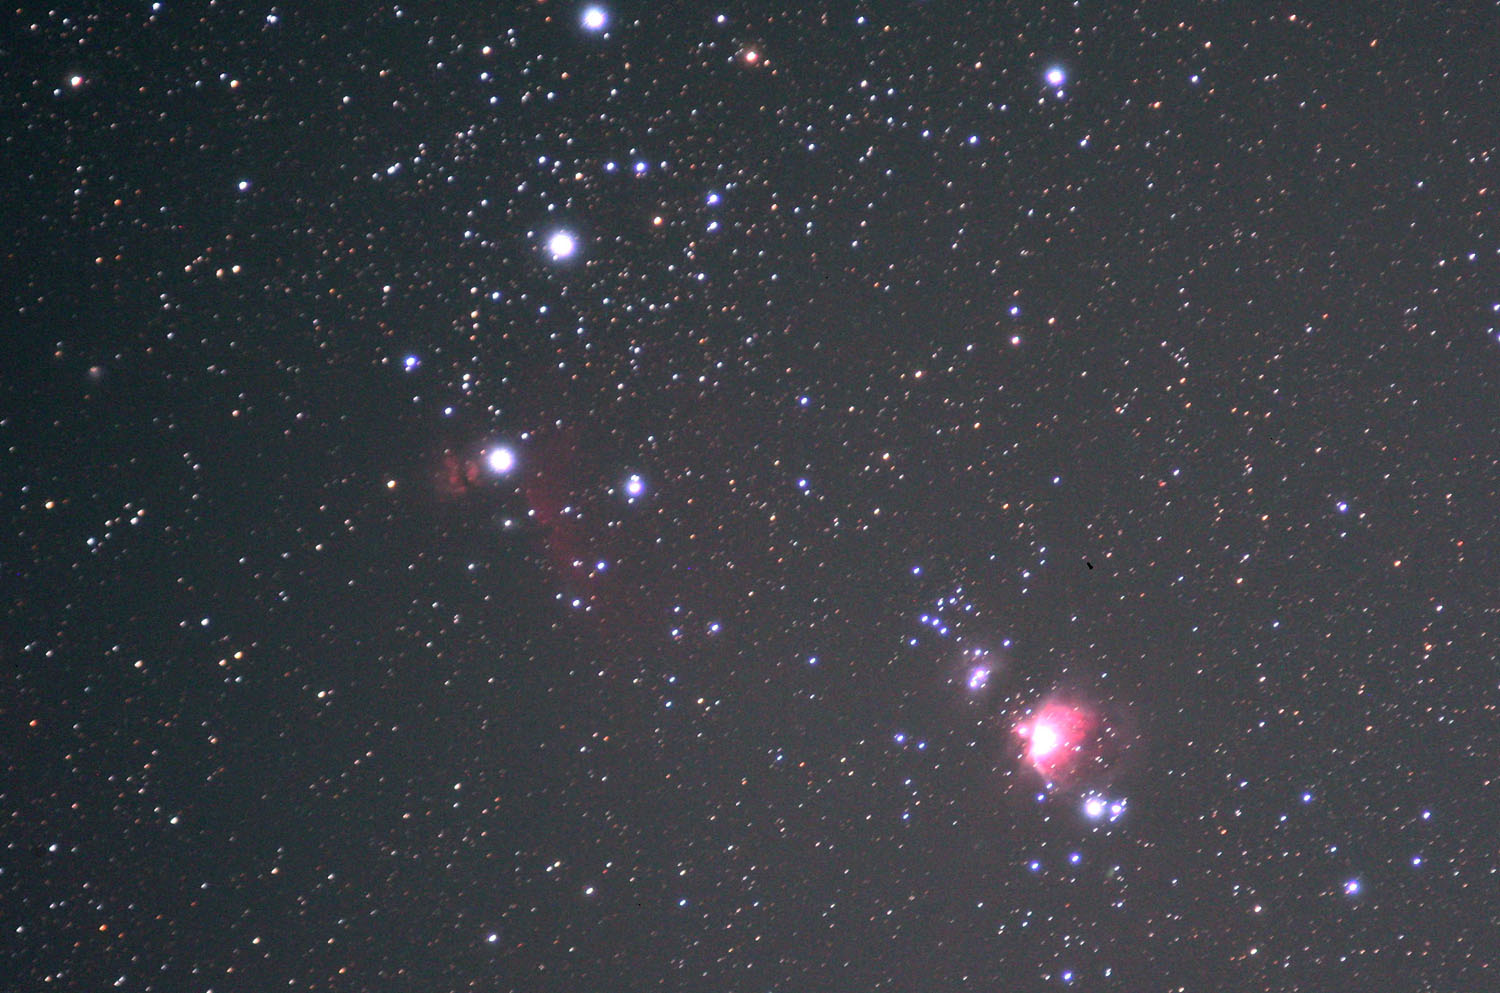 Orion-130202-iop-70m-800-501cs1.jpg